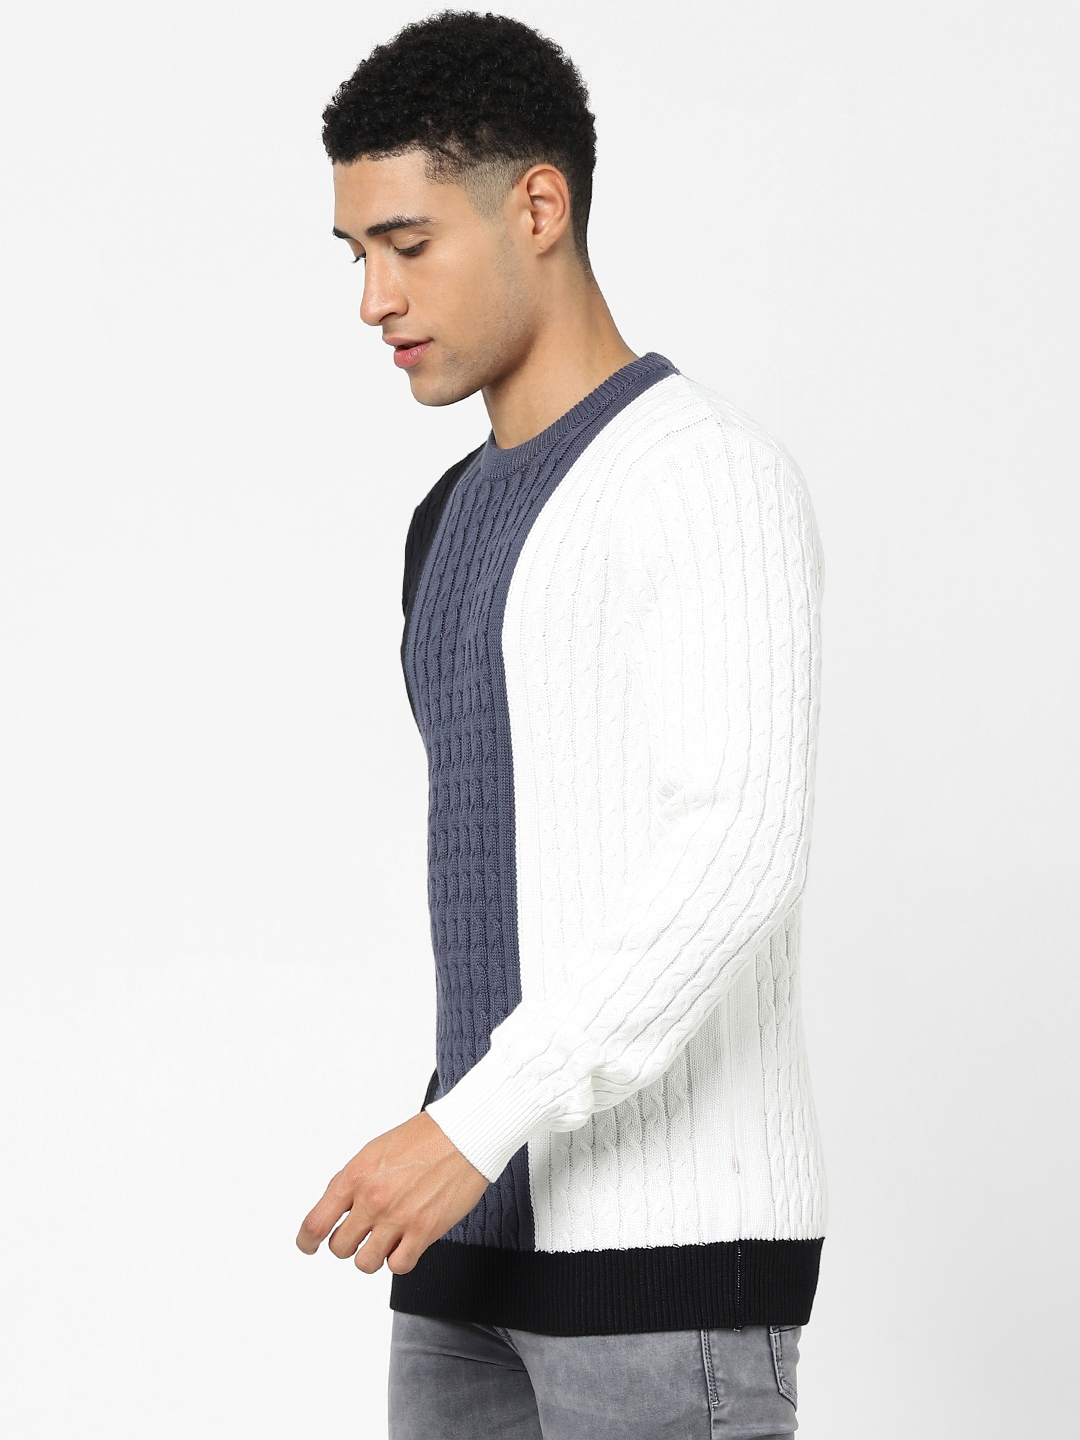 Men's Black Colourblock Sweaters